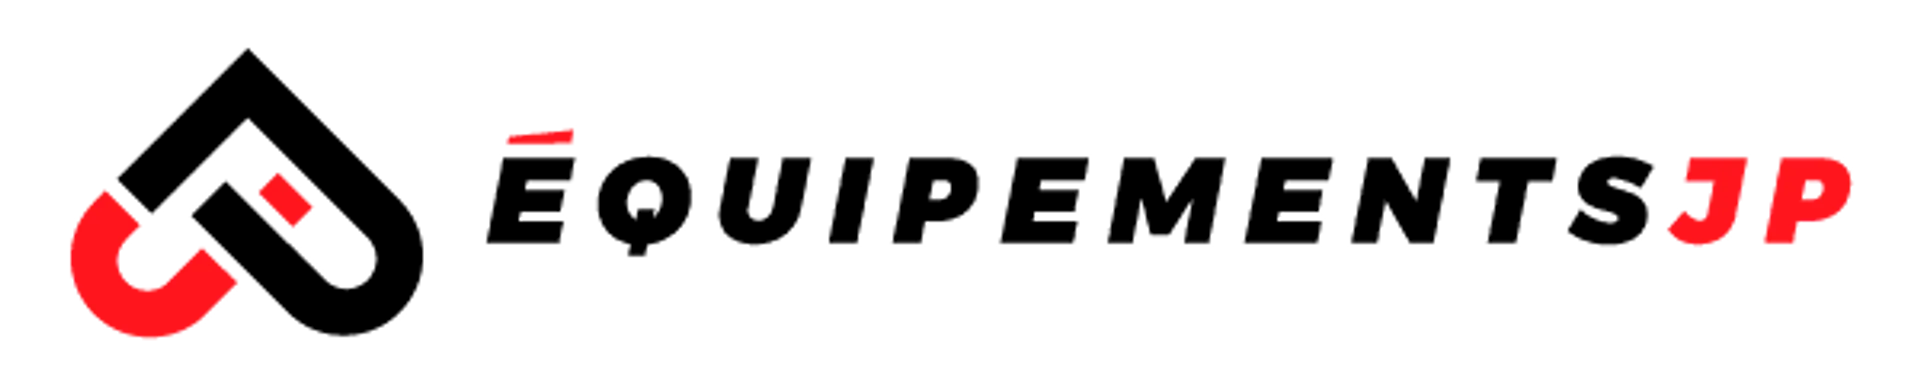 ÉQUIPEMENT JP logo de circulaire